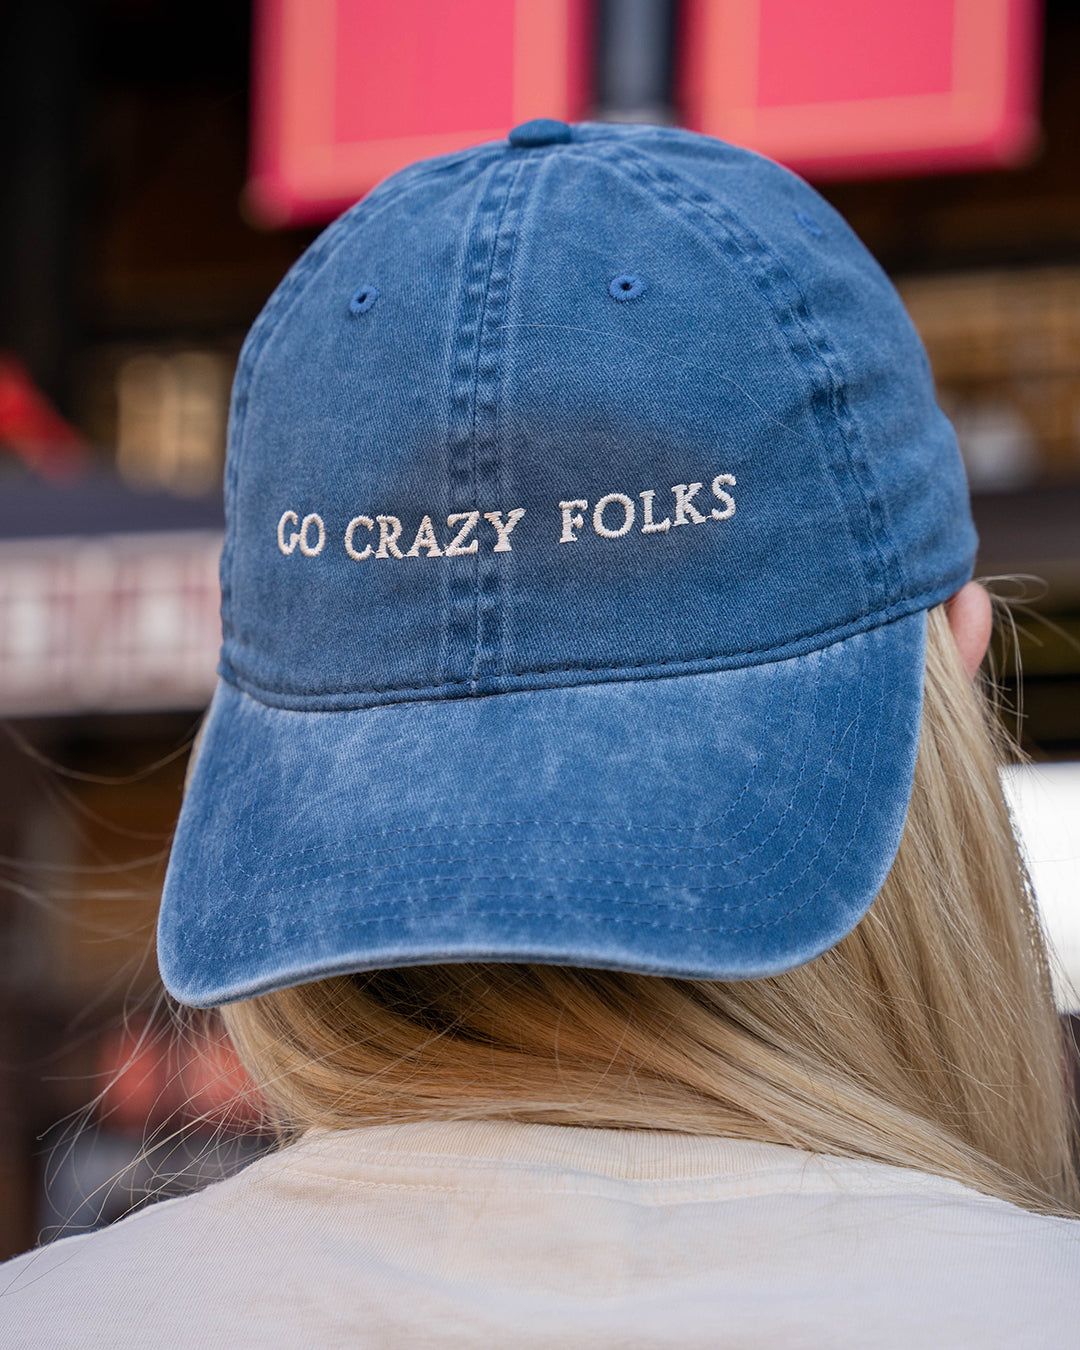 Go Crazy Folks Embroidered Hat